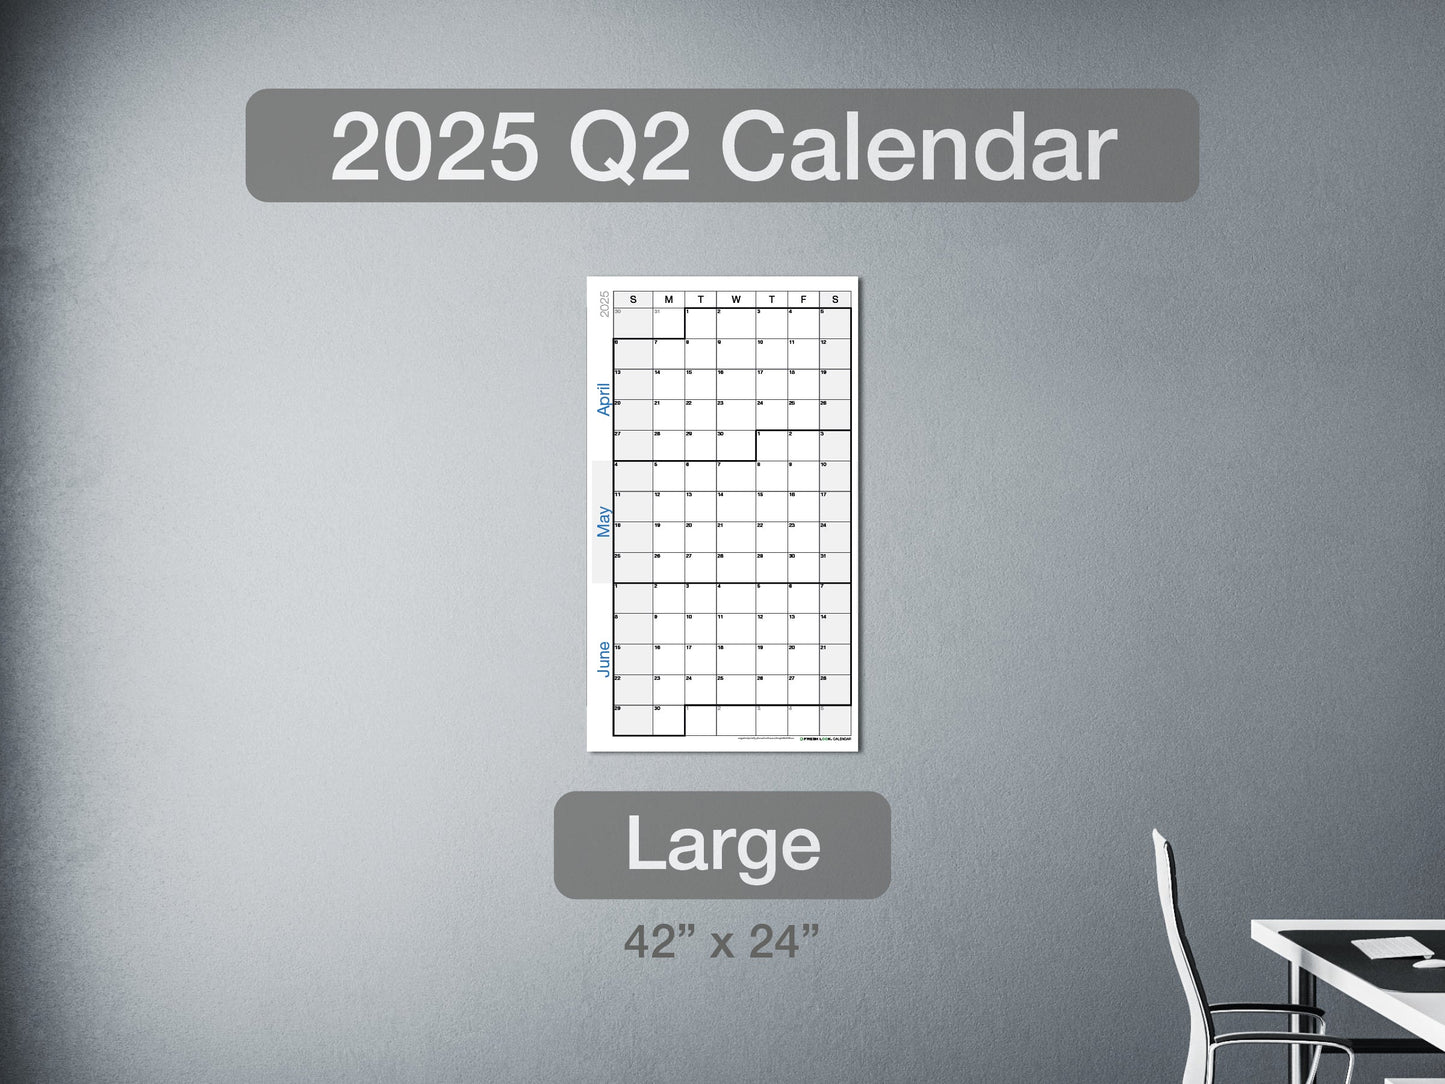 2025 Q2 Calendar Large